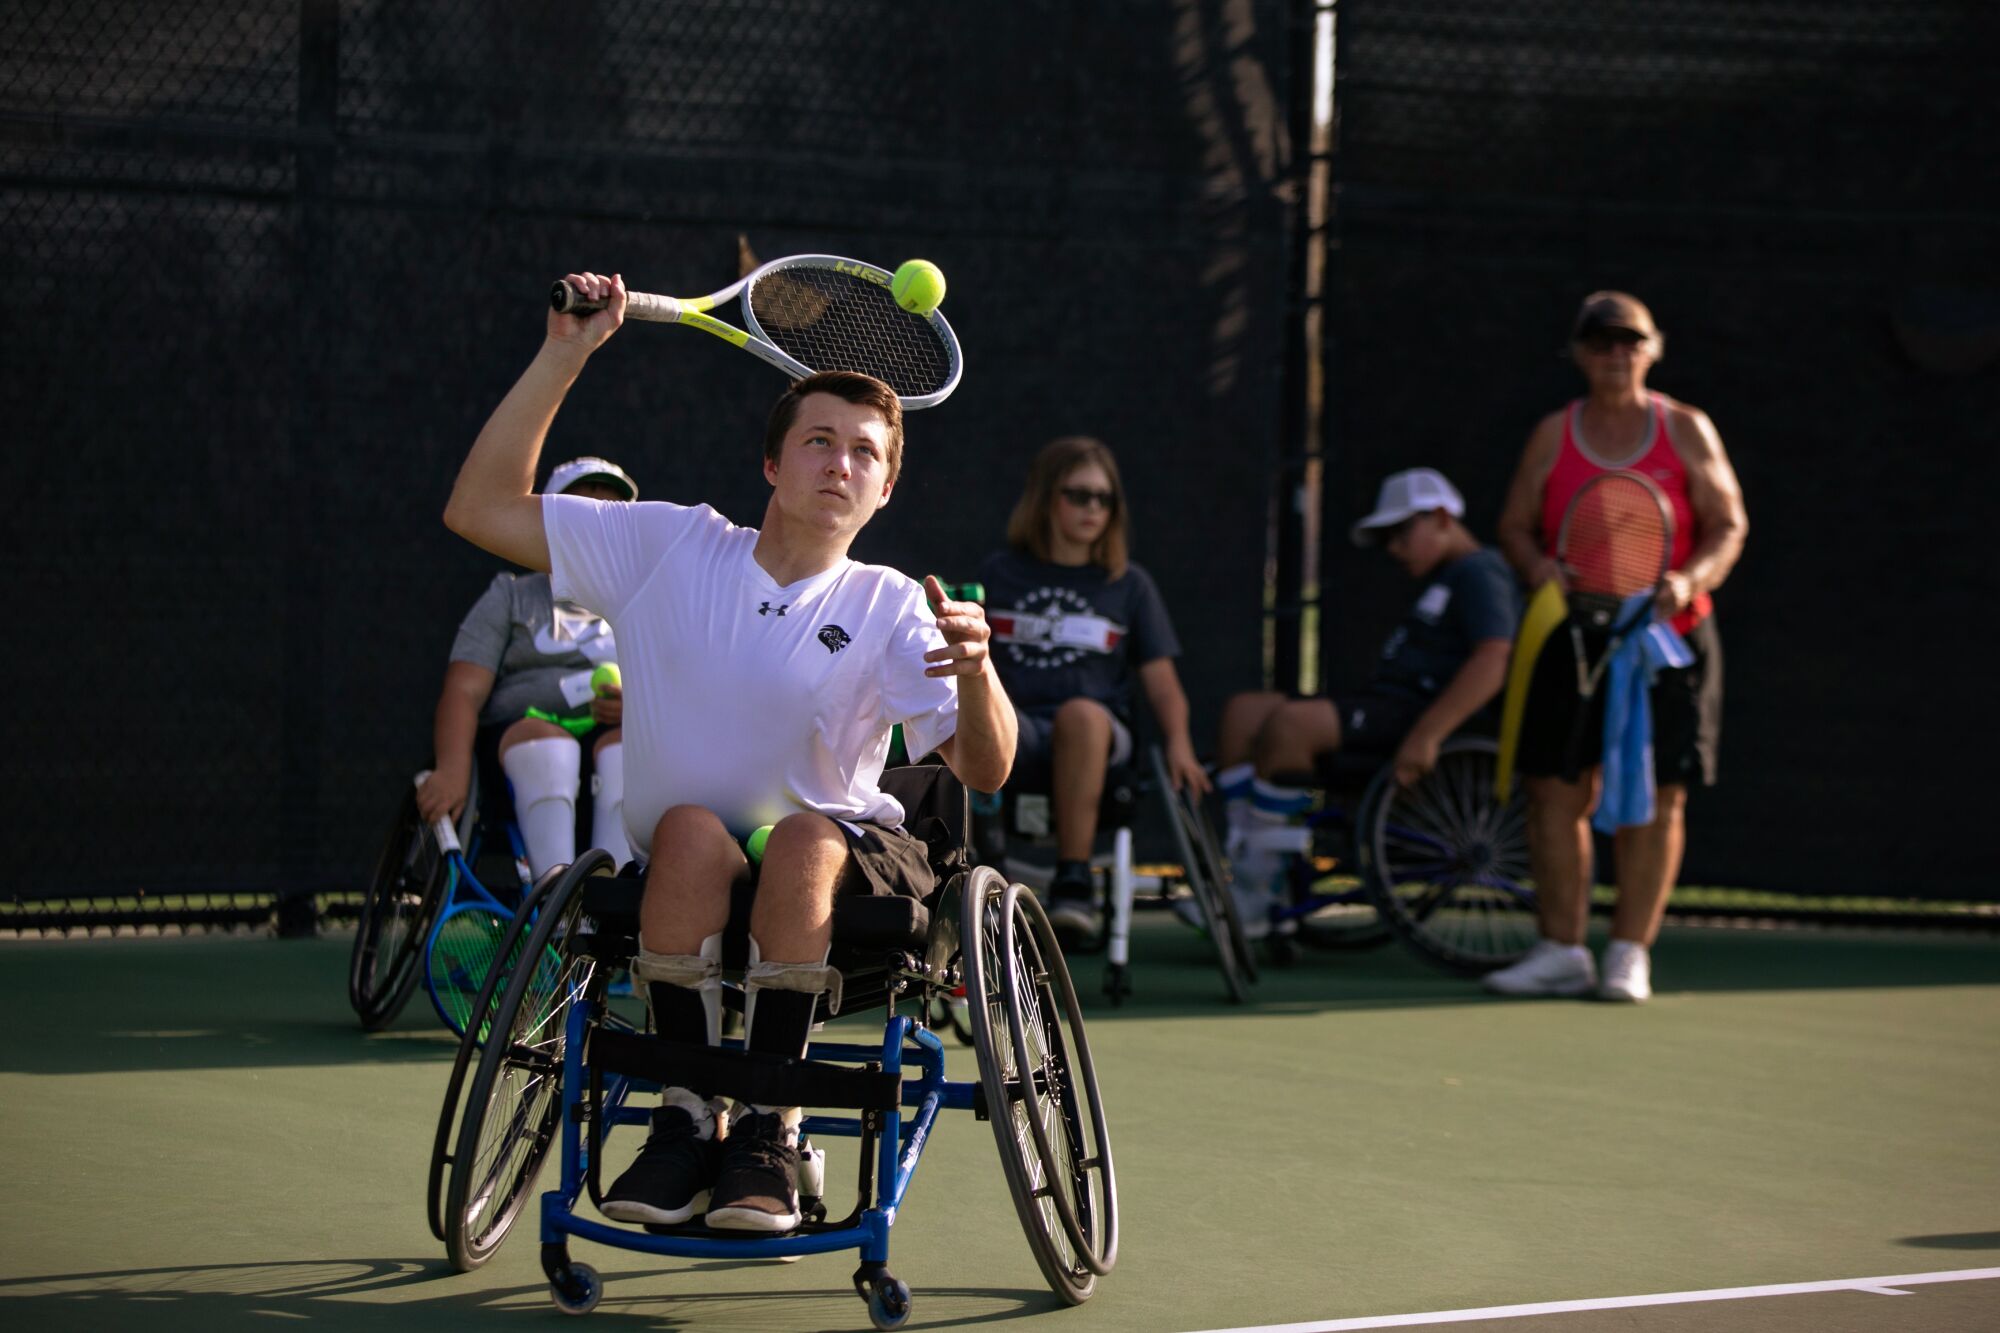 Landon Sachs swings his racket overhead during a tennis practice at JSerra High School.